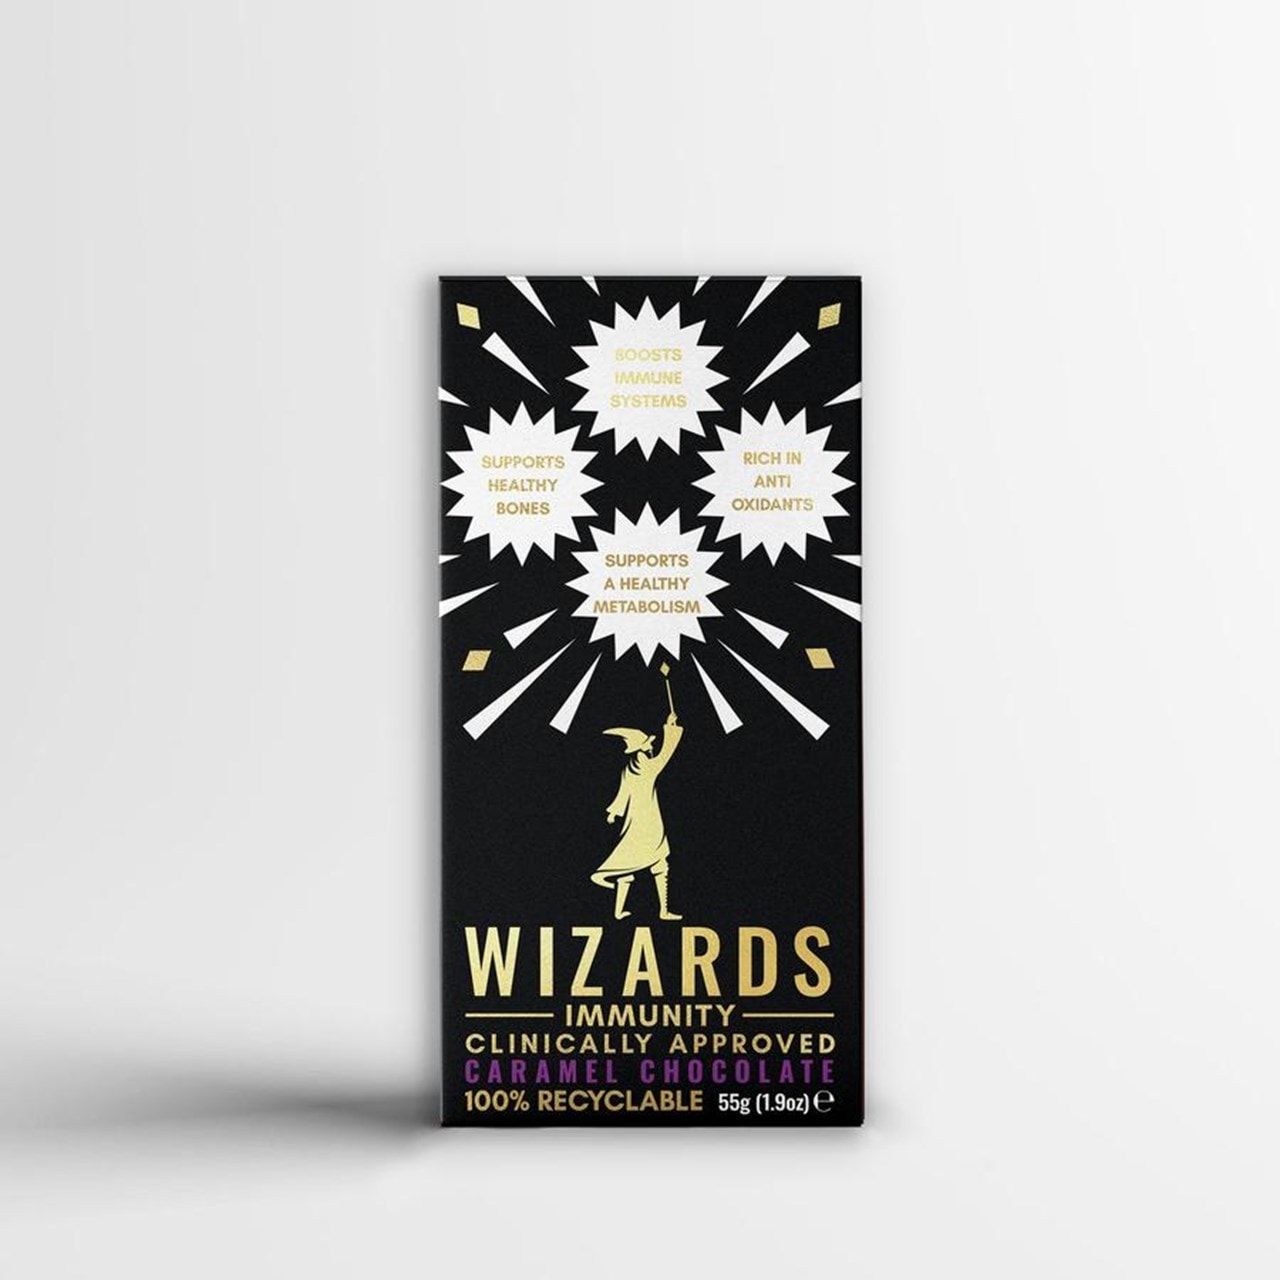 Wizards Magic Chocolate Immunity Gift Pack Orange Caramel Pack Of 4 Chocolate Bars Free Shipping Over 20 Hmv Store